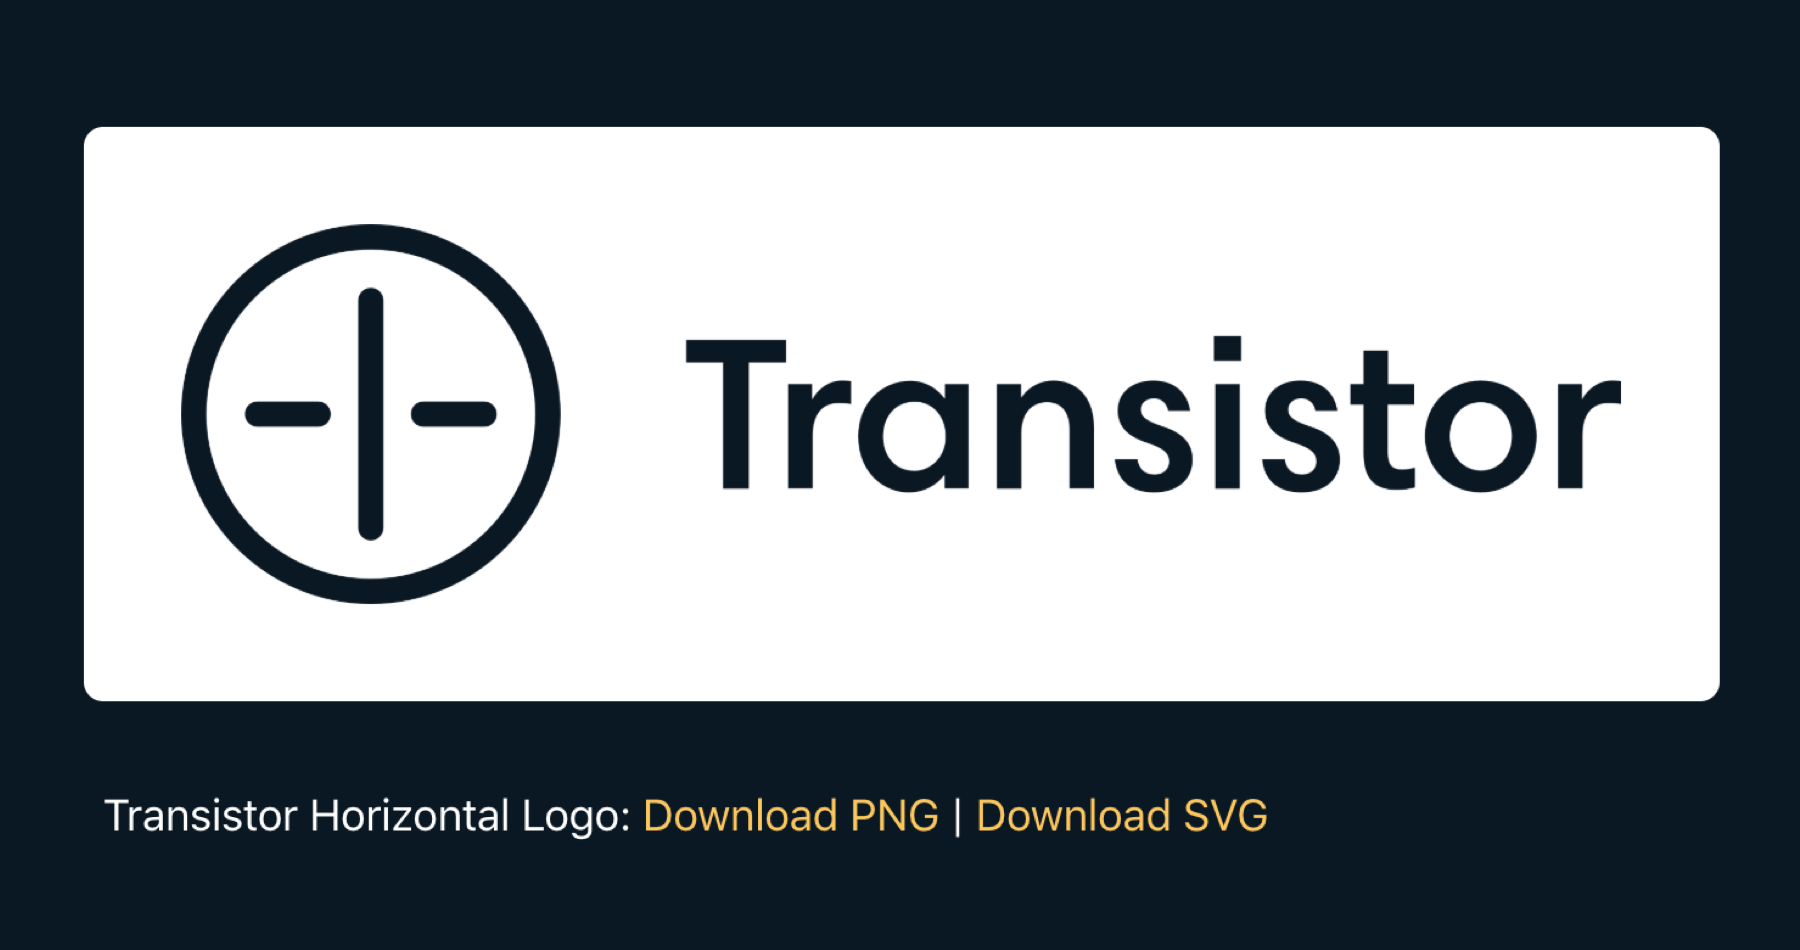 Detail press. Транзистор лого. Логотипы подкастов. Transistor lovers лого. Transistor logo PNG.